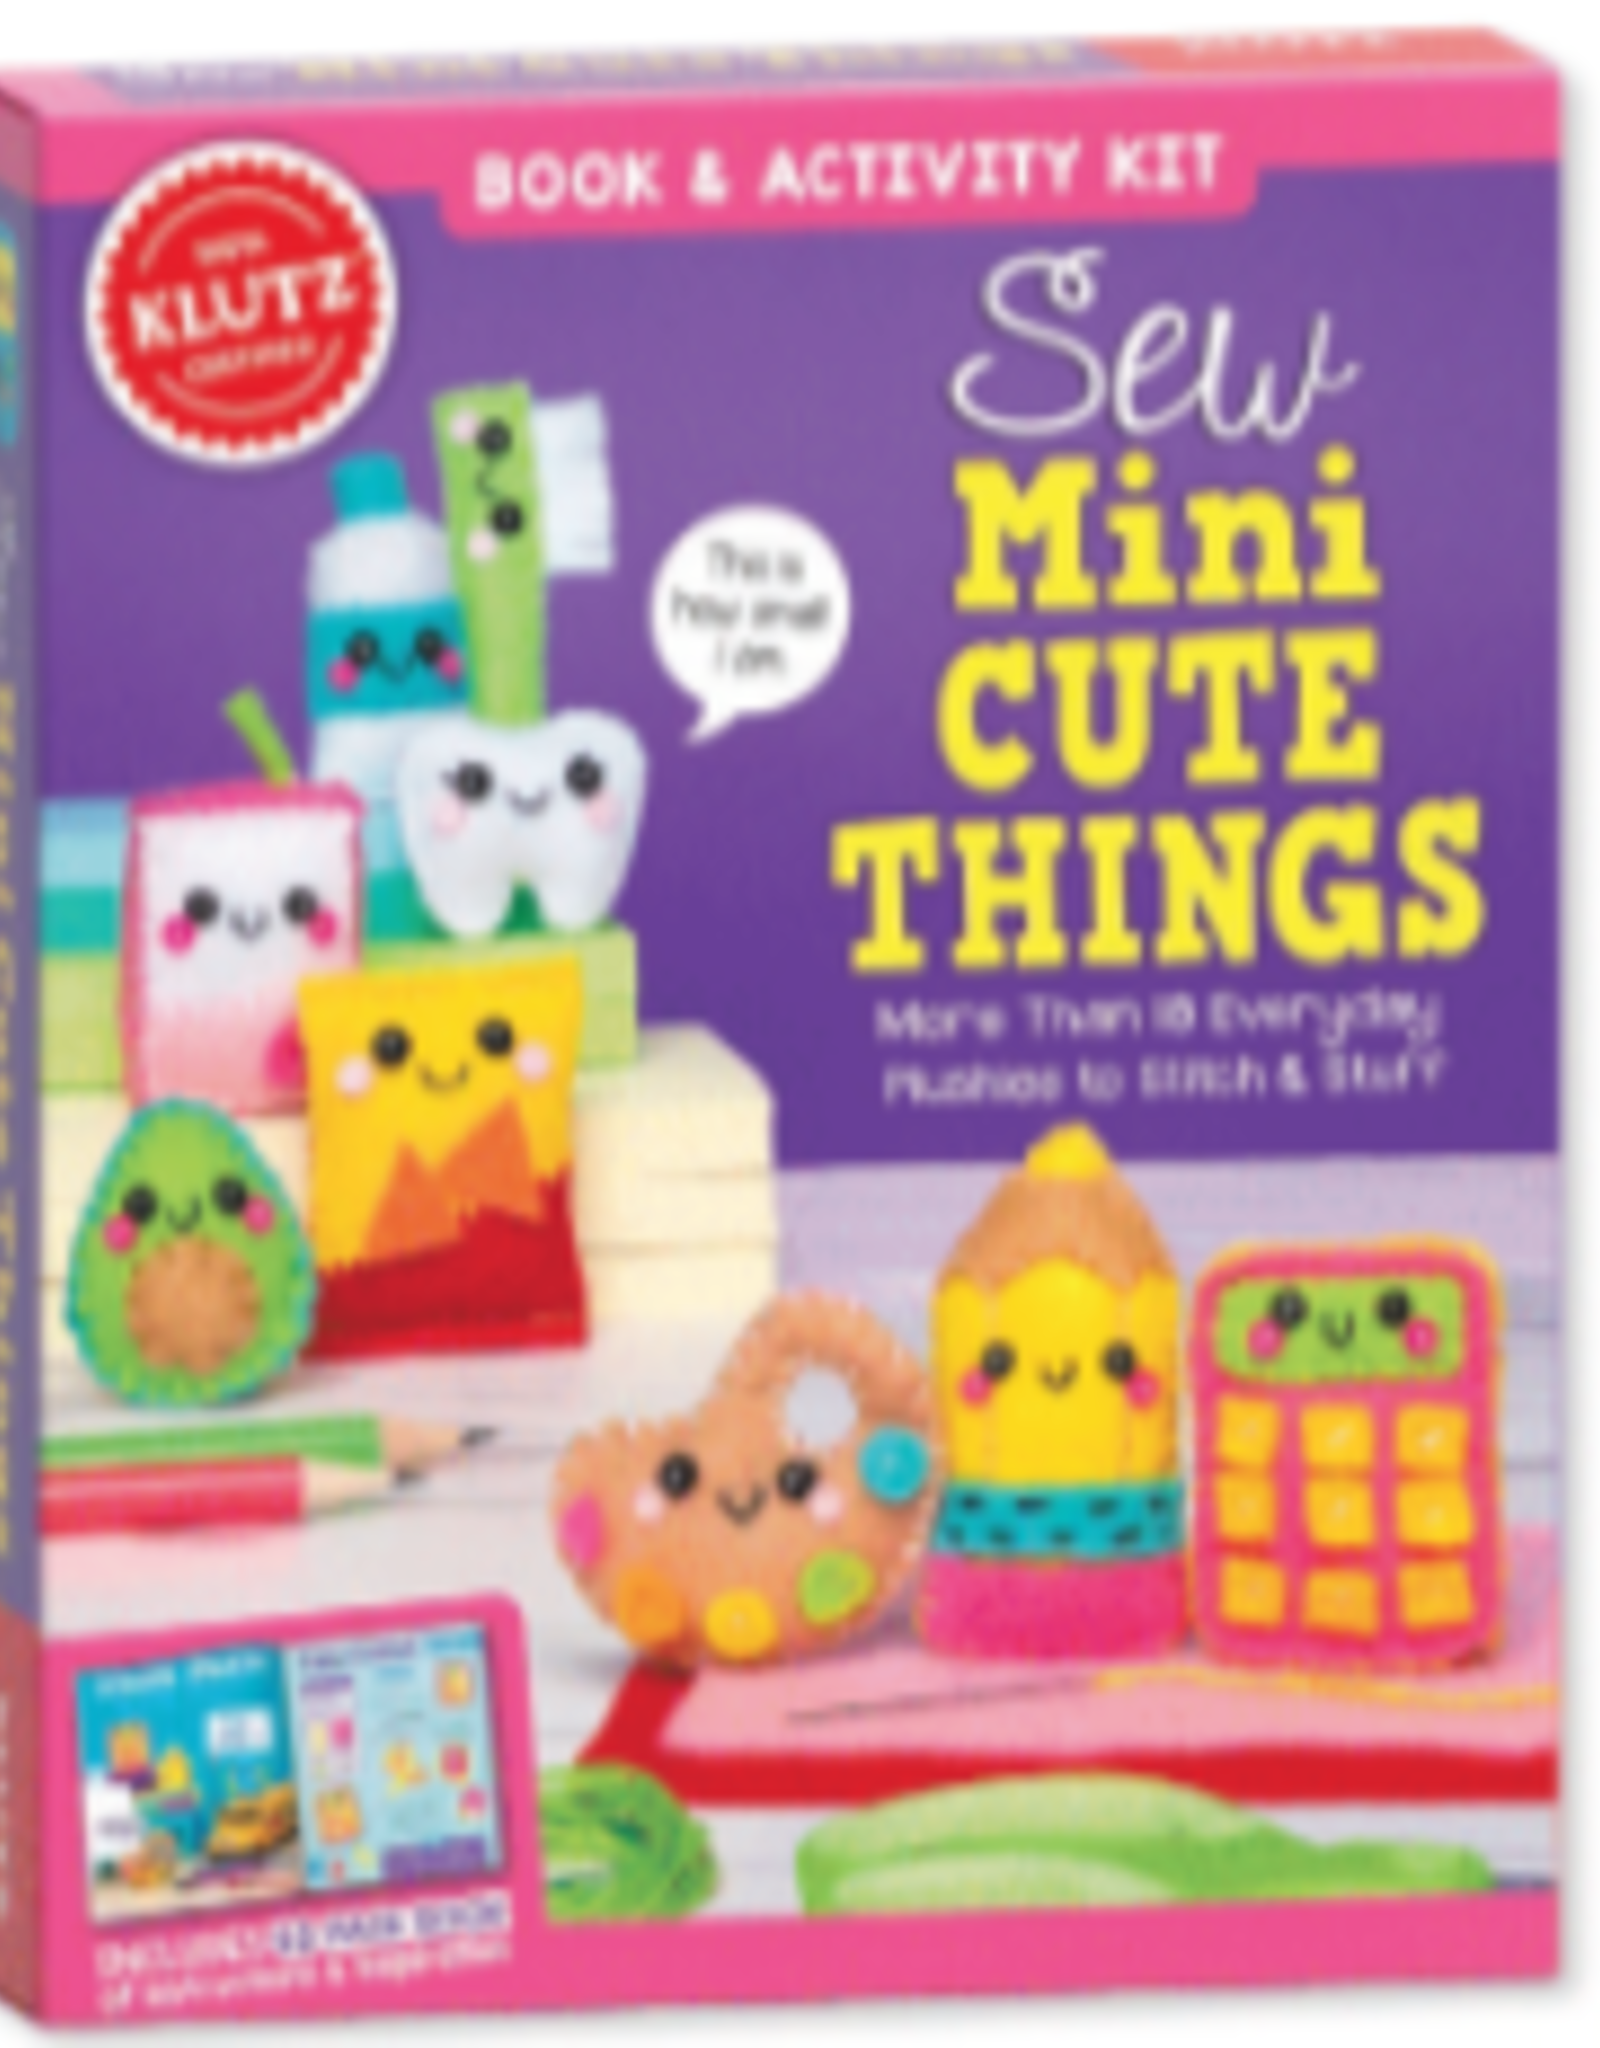 Sew Mini Cute Things